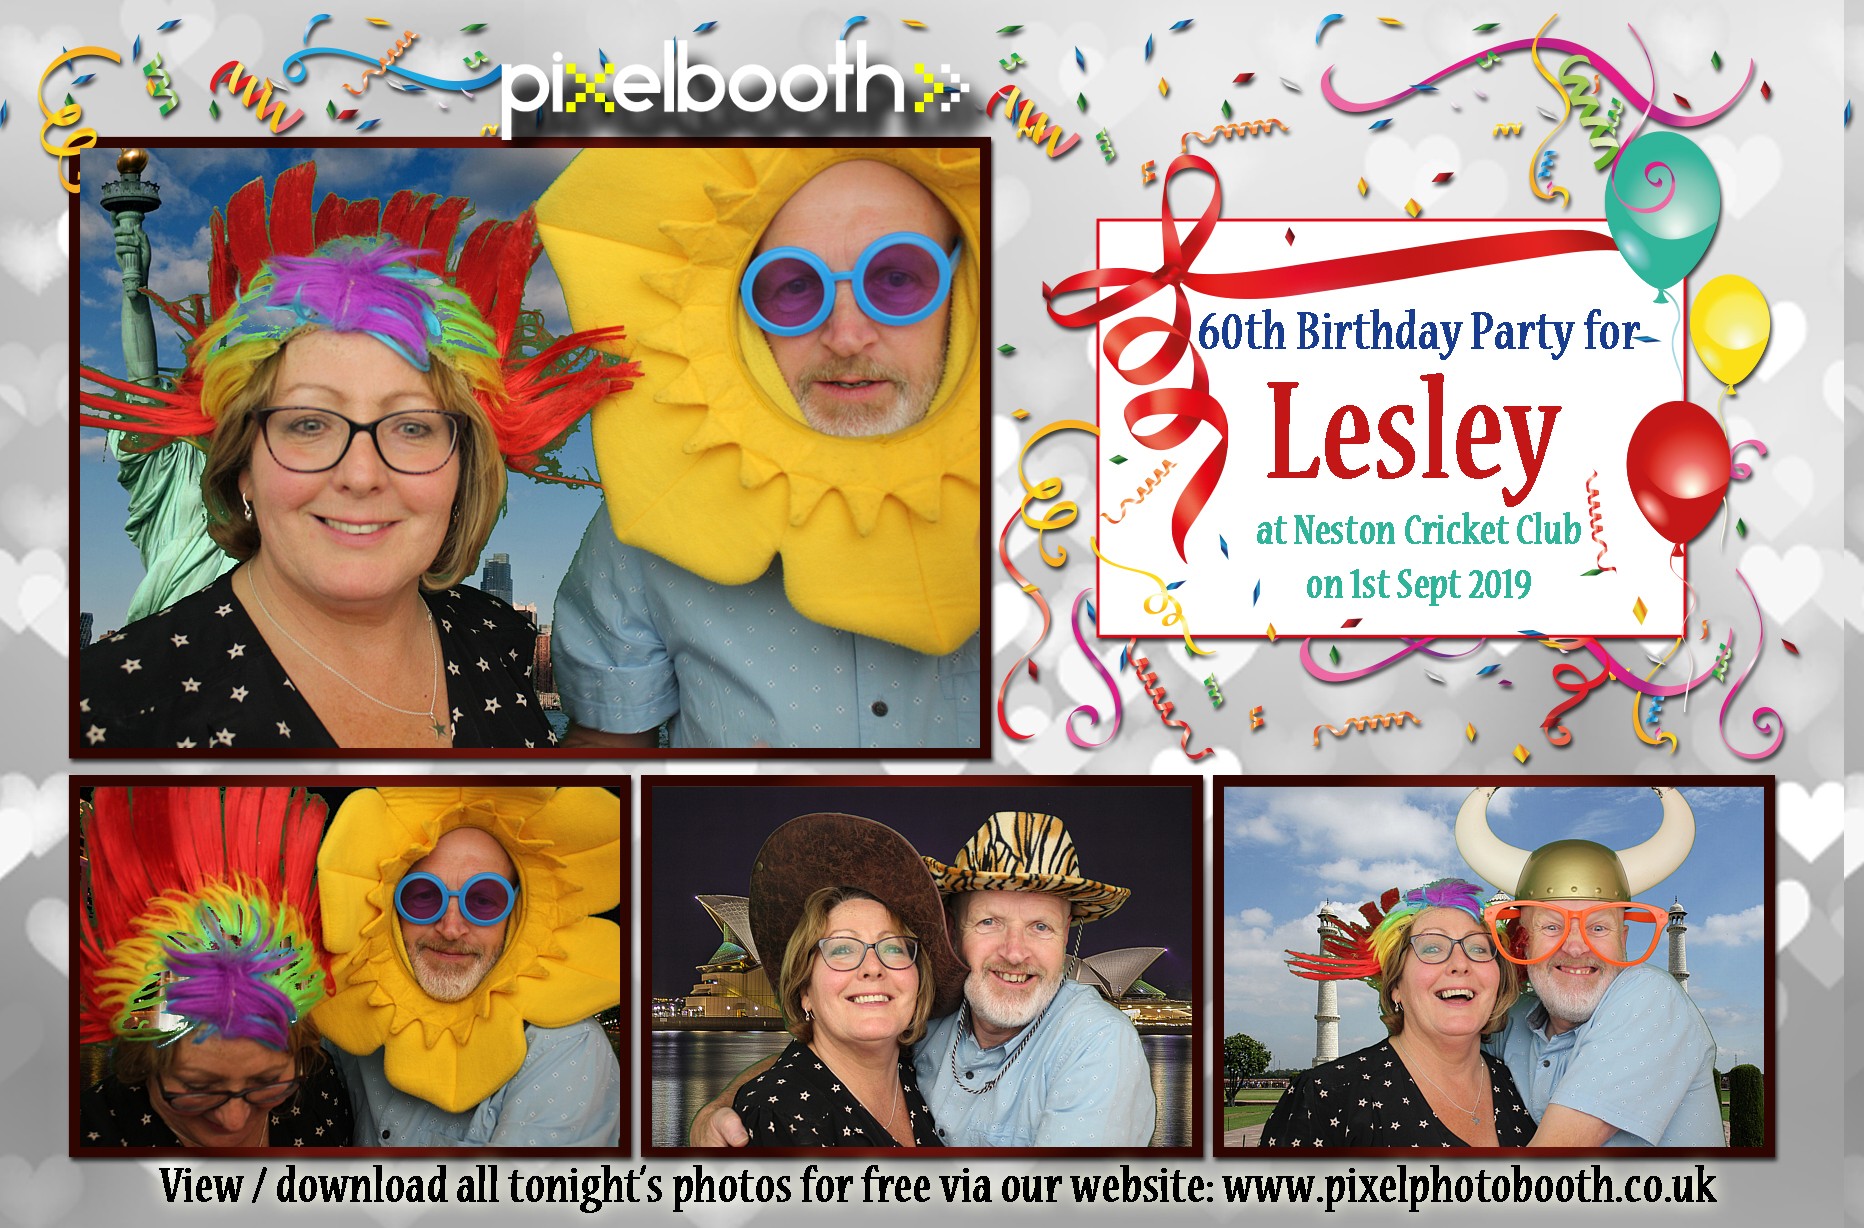 1st Sept 2019: 60th Birthday for Lesley at Neston Cricket Club